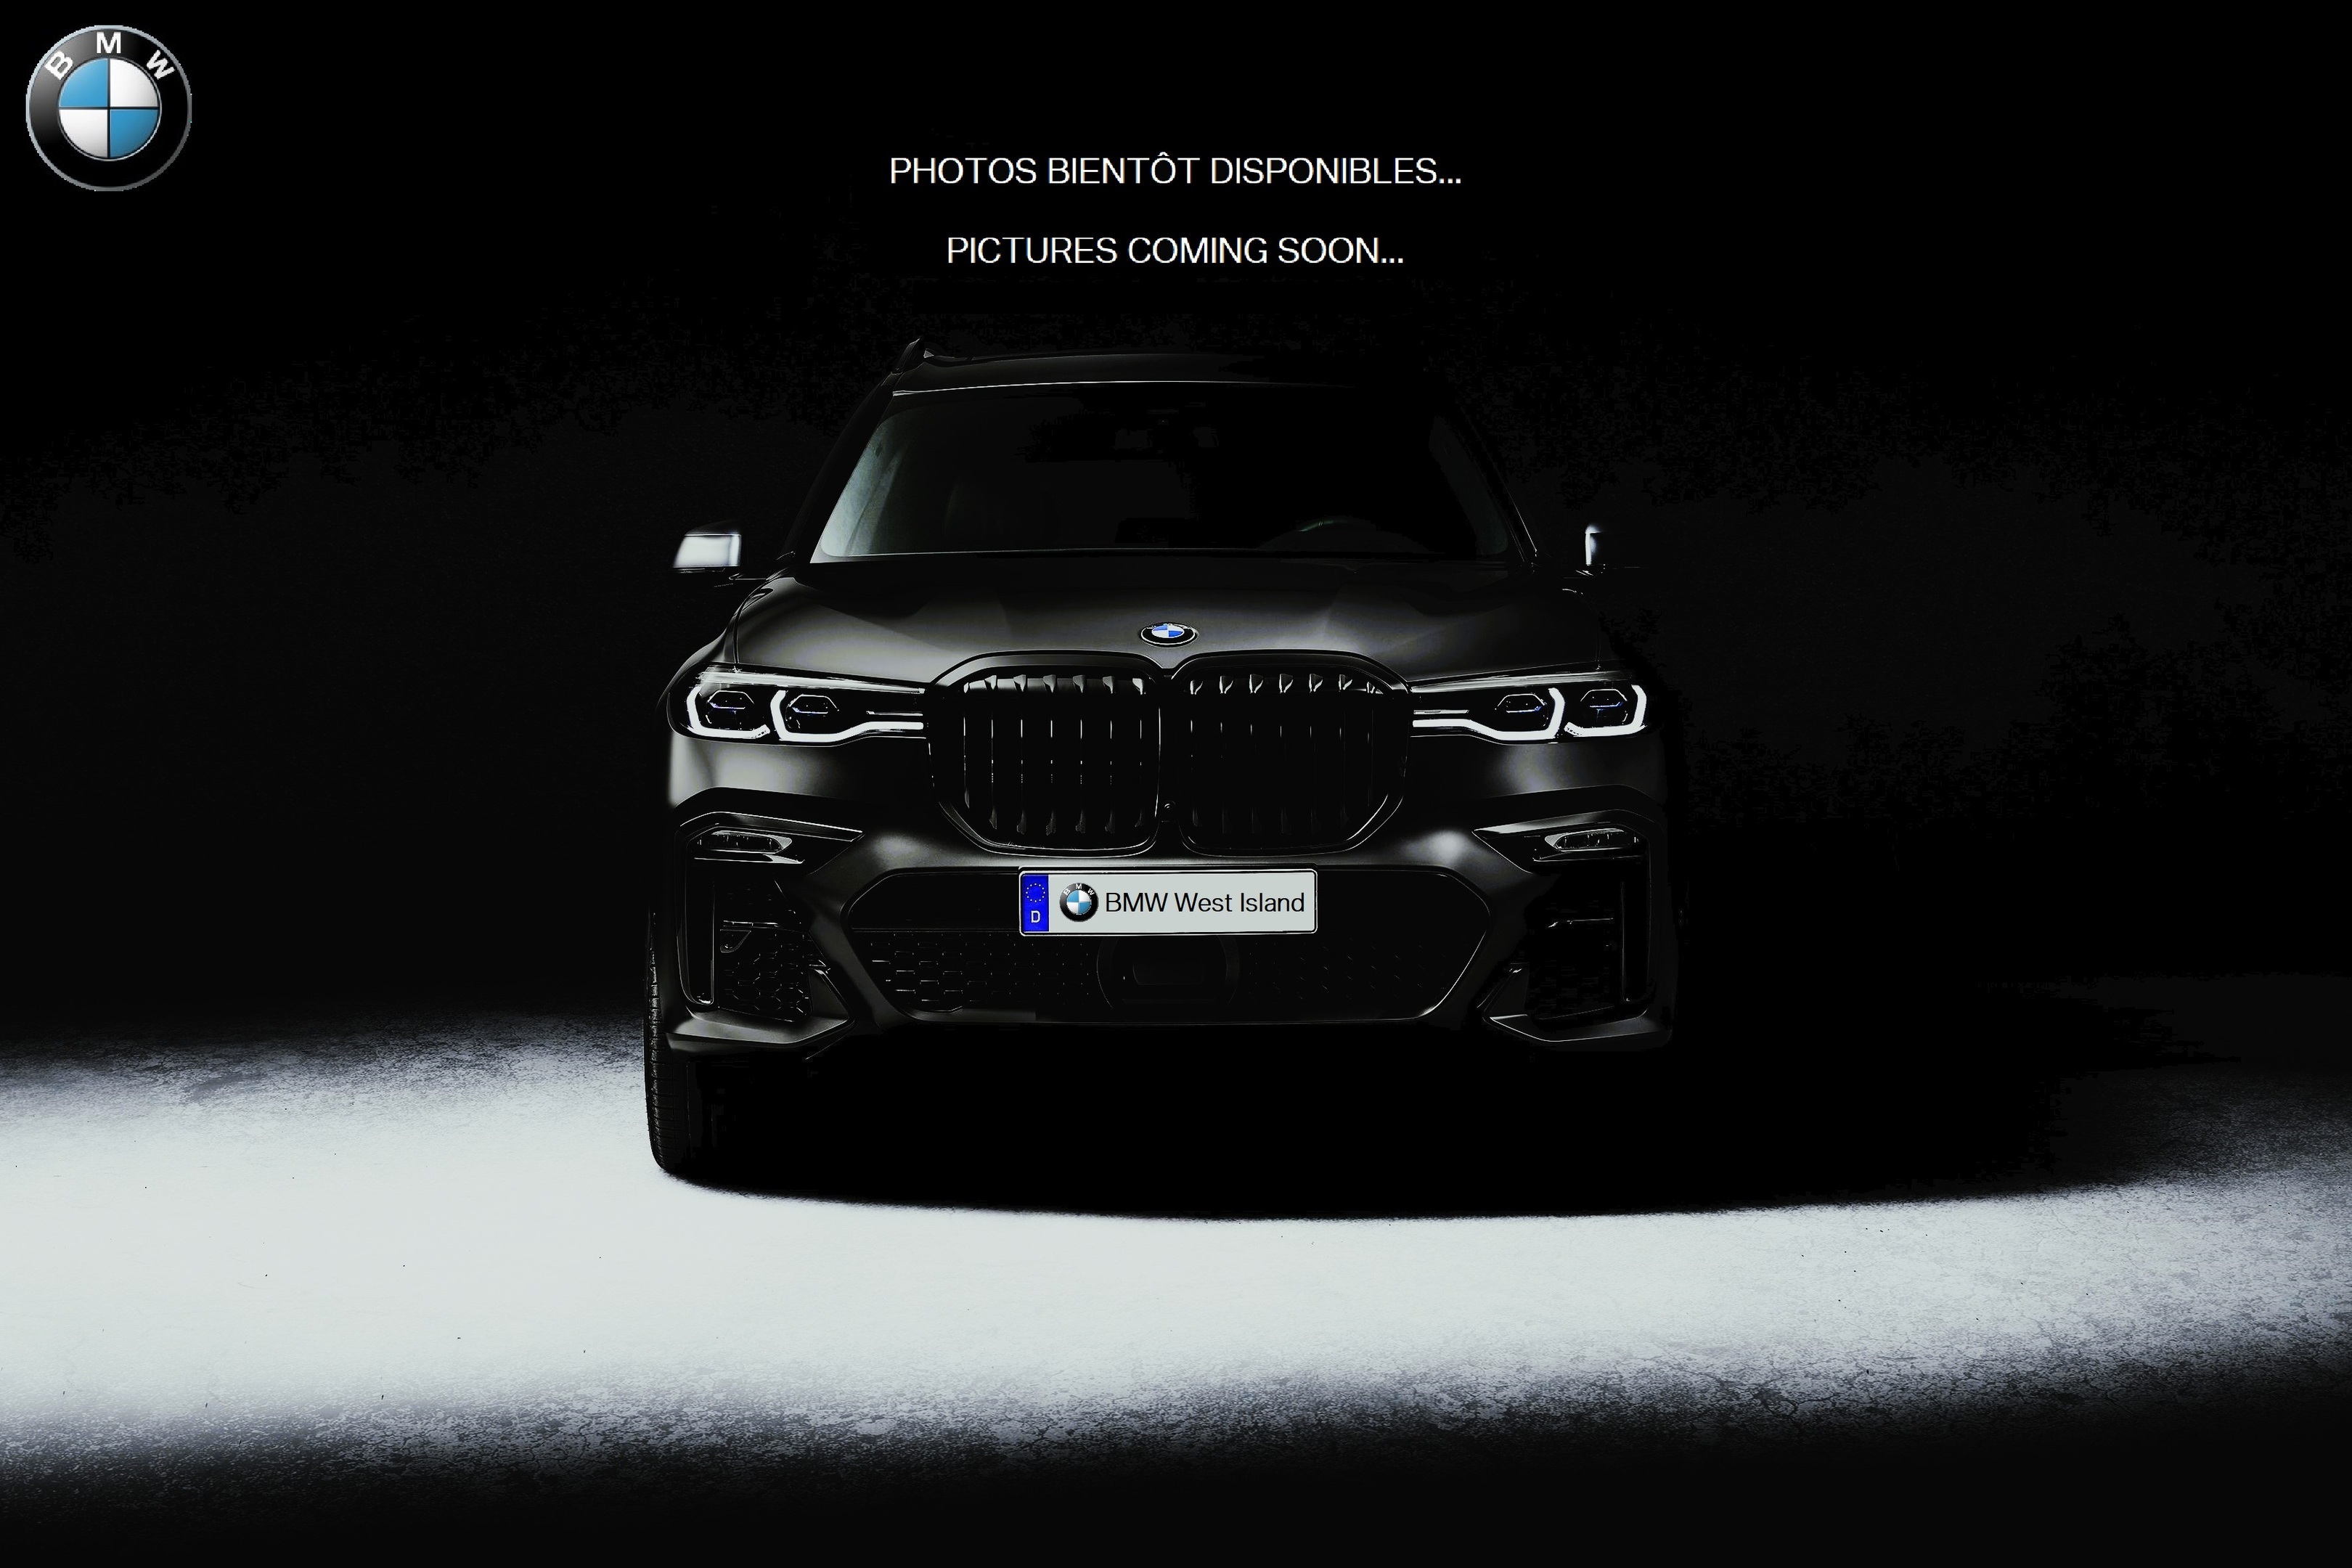 2020 BMW X2 Série Certifié de BMW - Premium Essential Package